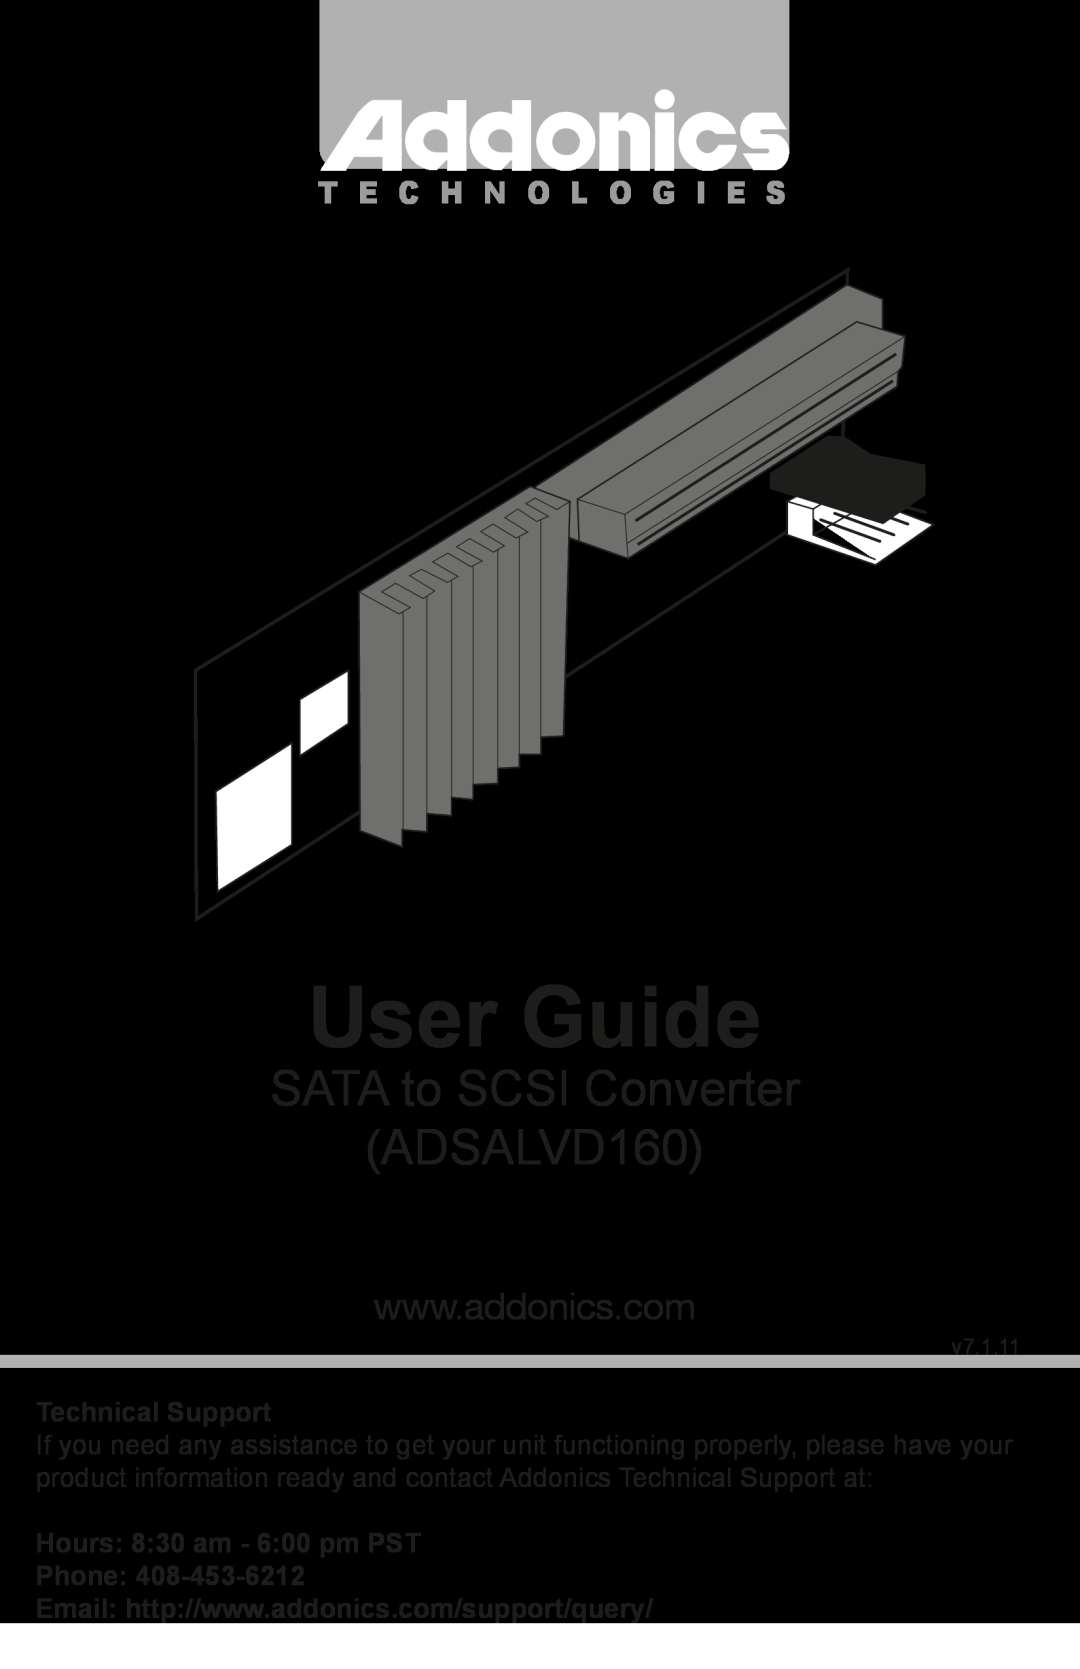 Addonics Technologies manual User Guide, SATA to SCSI Converter ADSALVD160, T E C H N O L O G I E S, Technical Support 